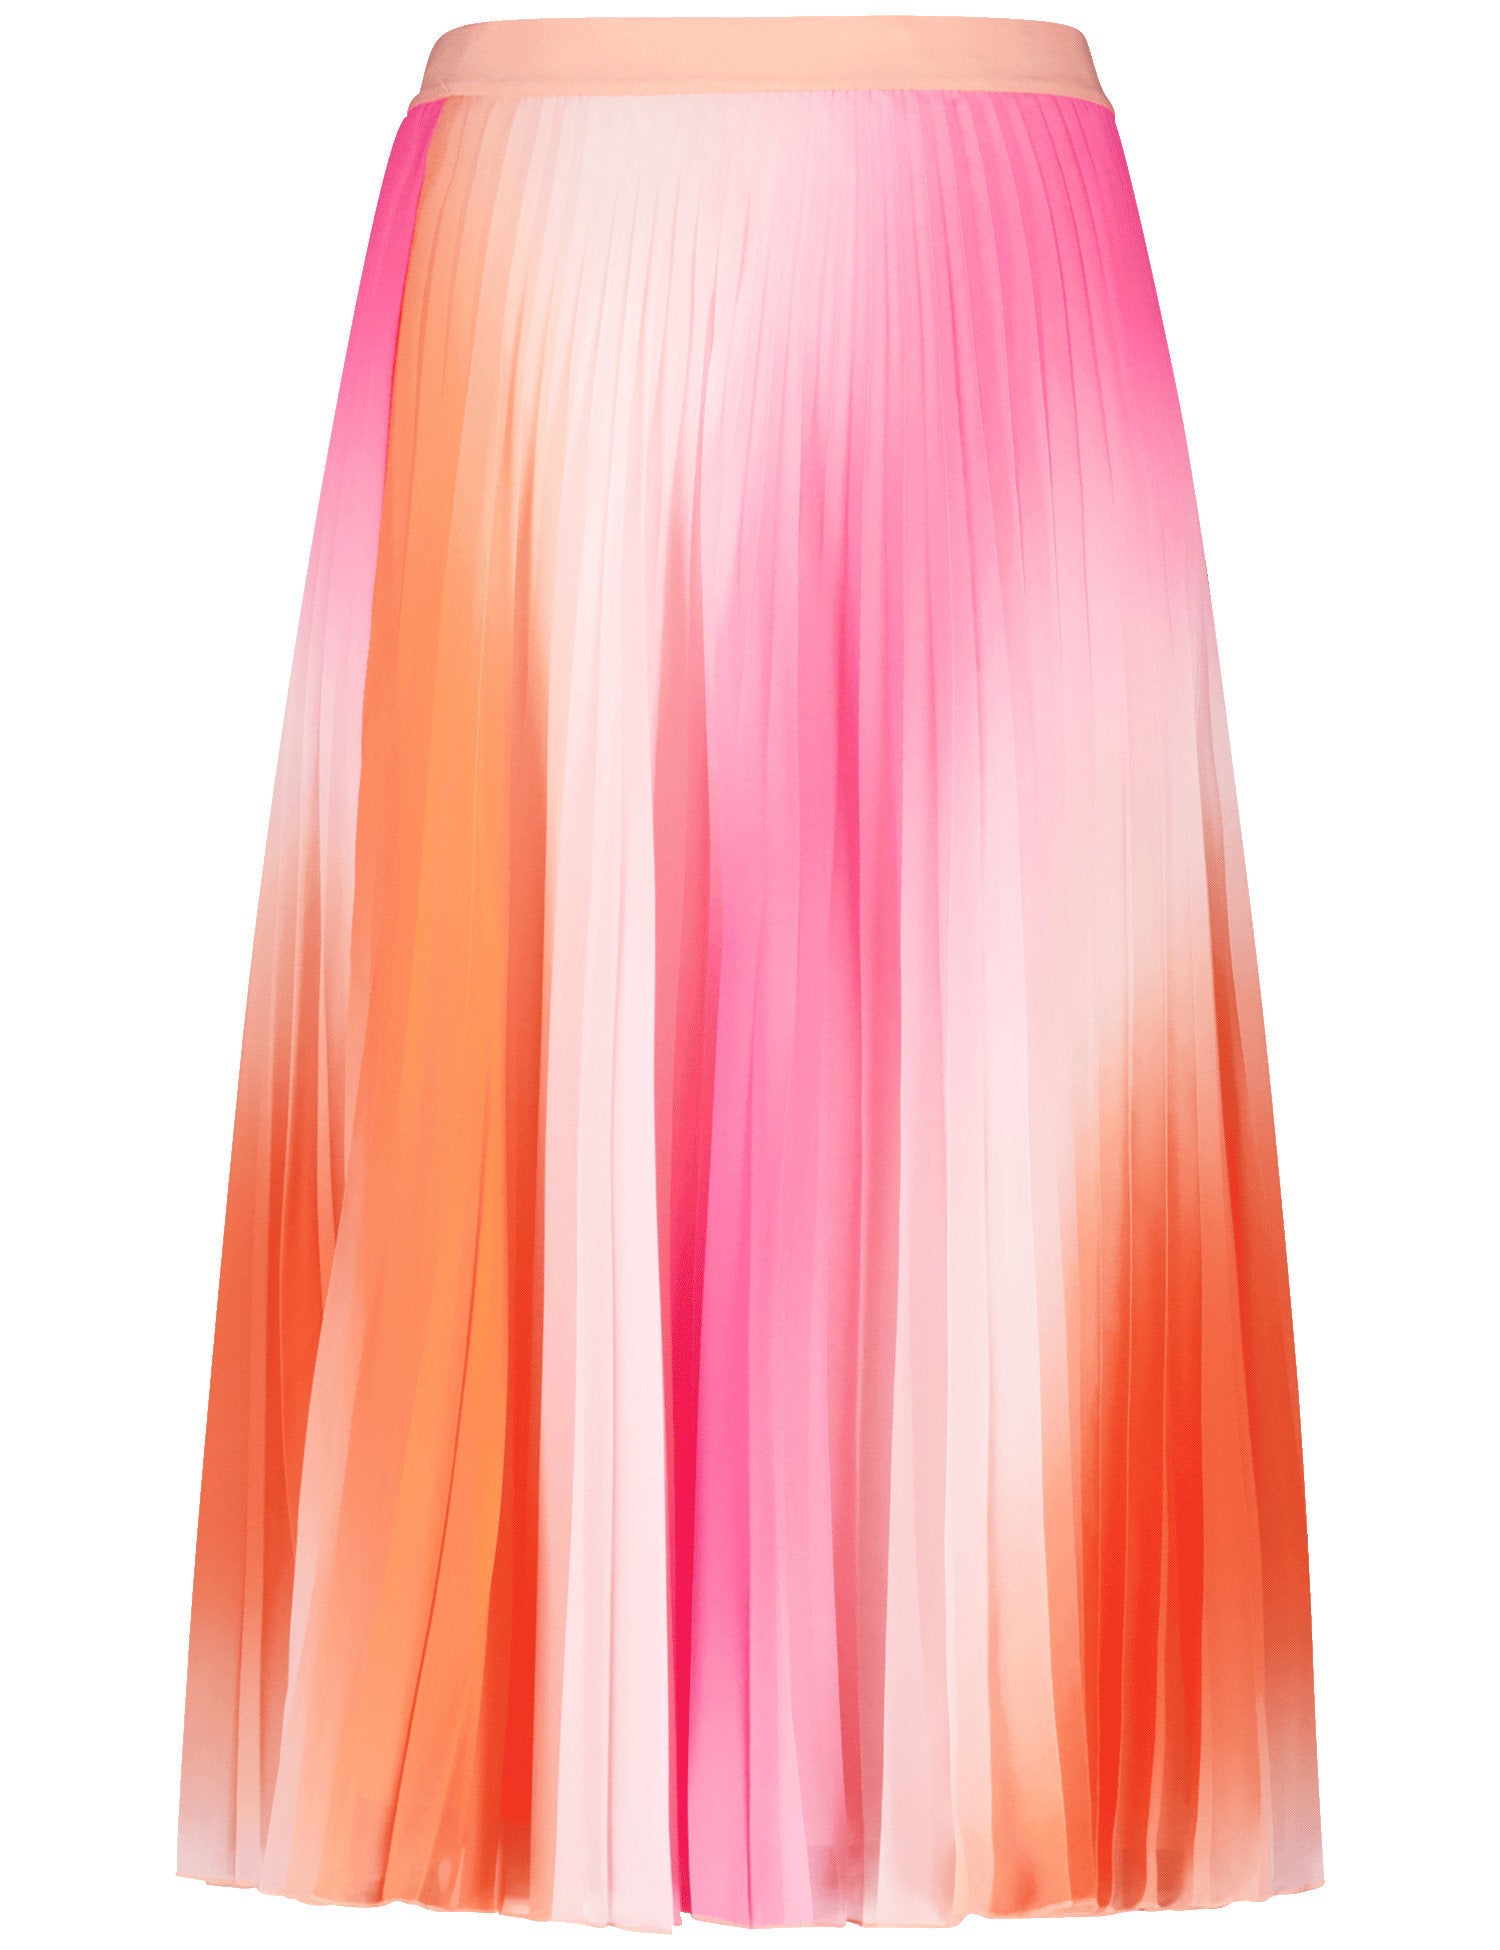 Pleated Skirt With Colour Graduation_310028-31268_3038_08